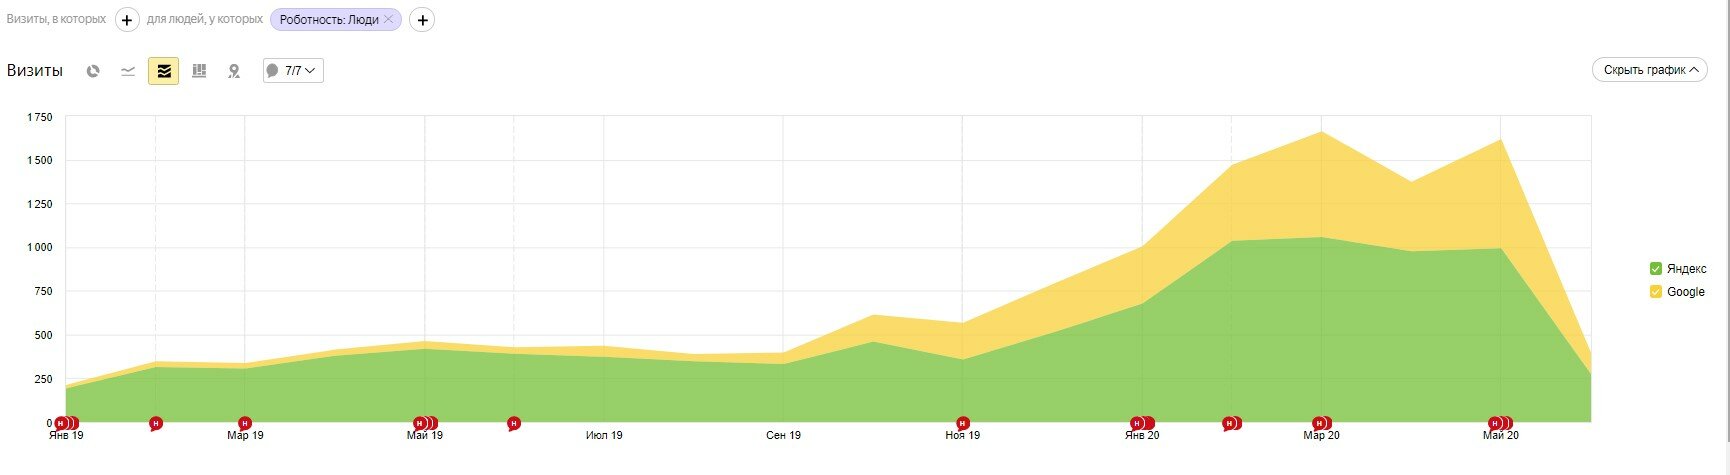 График роста трафика в Яндексе и Гугле